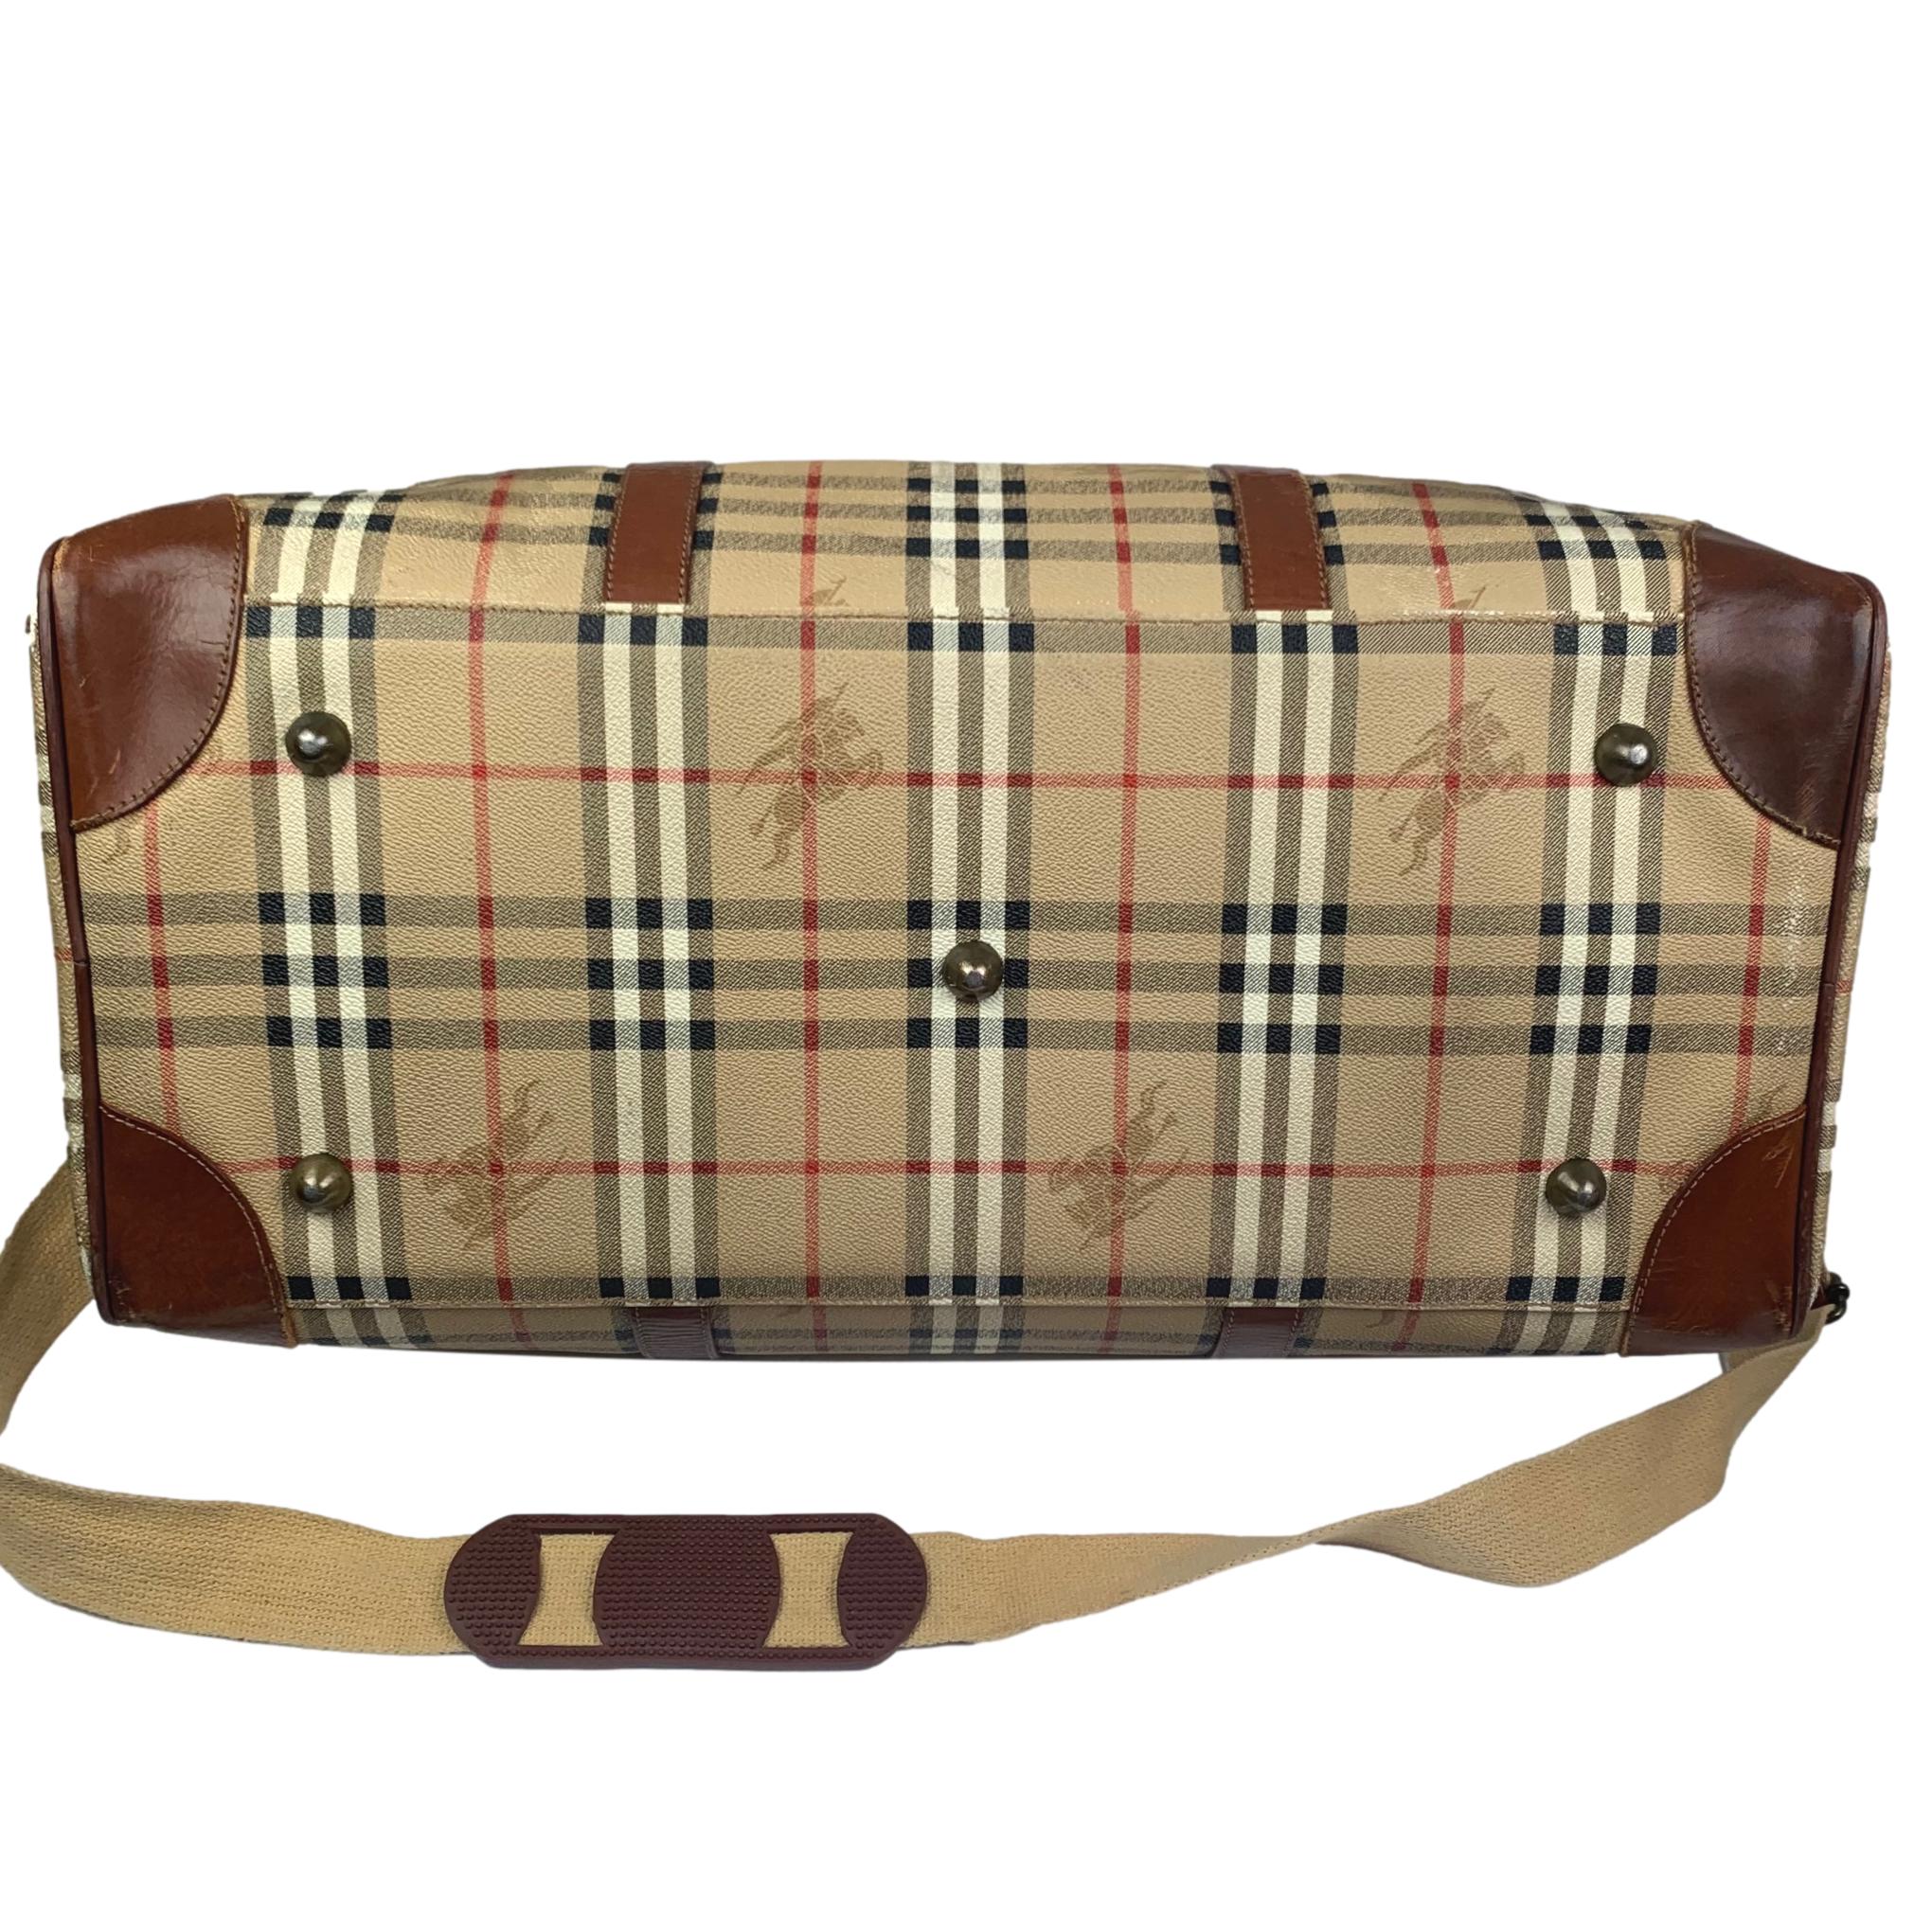 Burberry Travel Bag - Burberry Nova Check Leather Brown